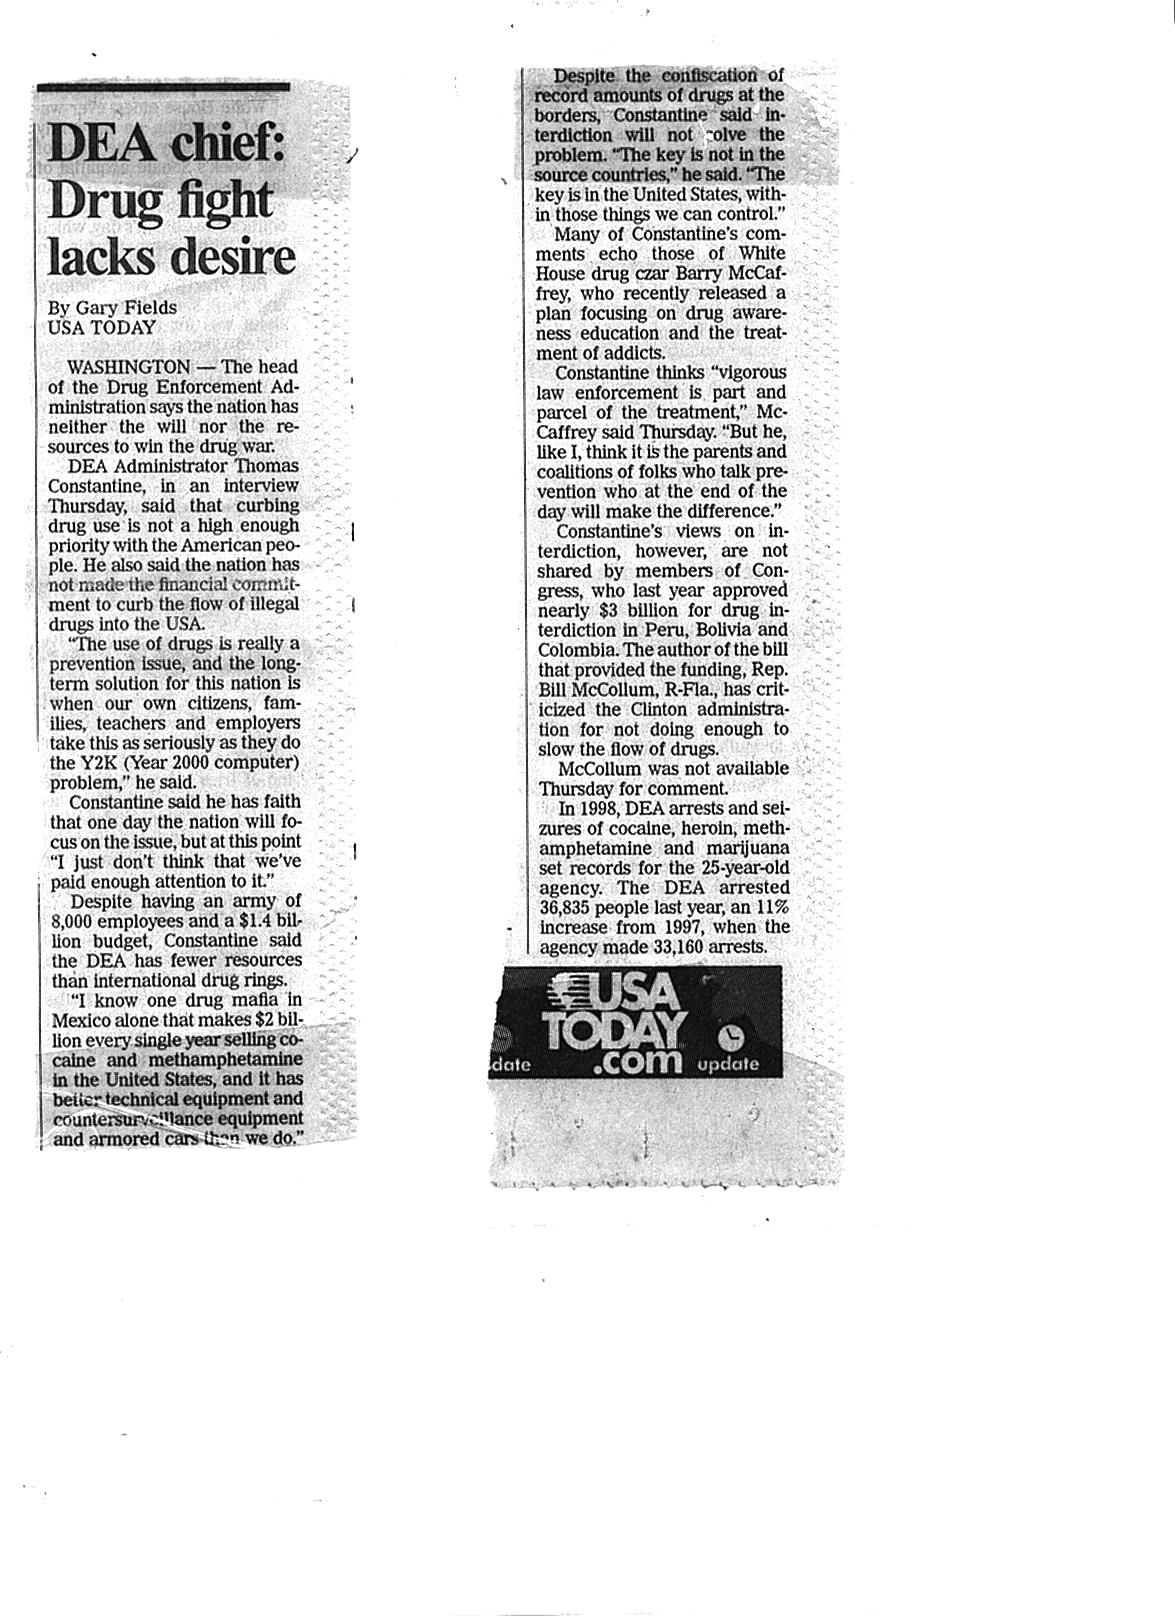 USA Today clipping 2/19/1999 DEA says